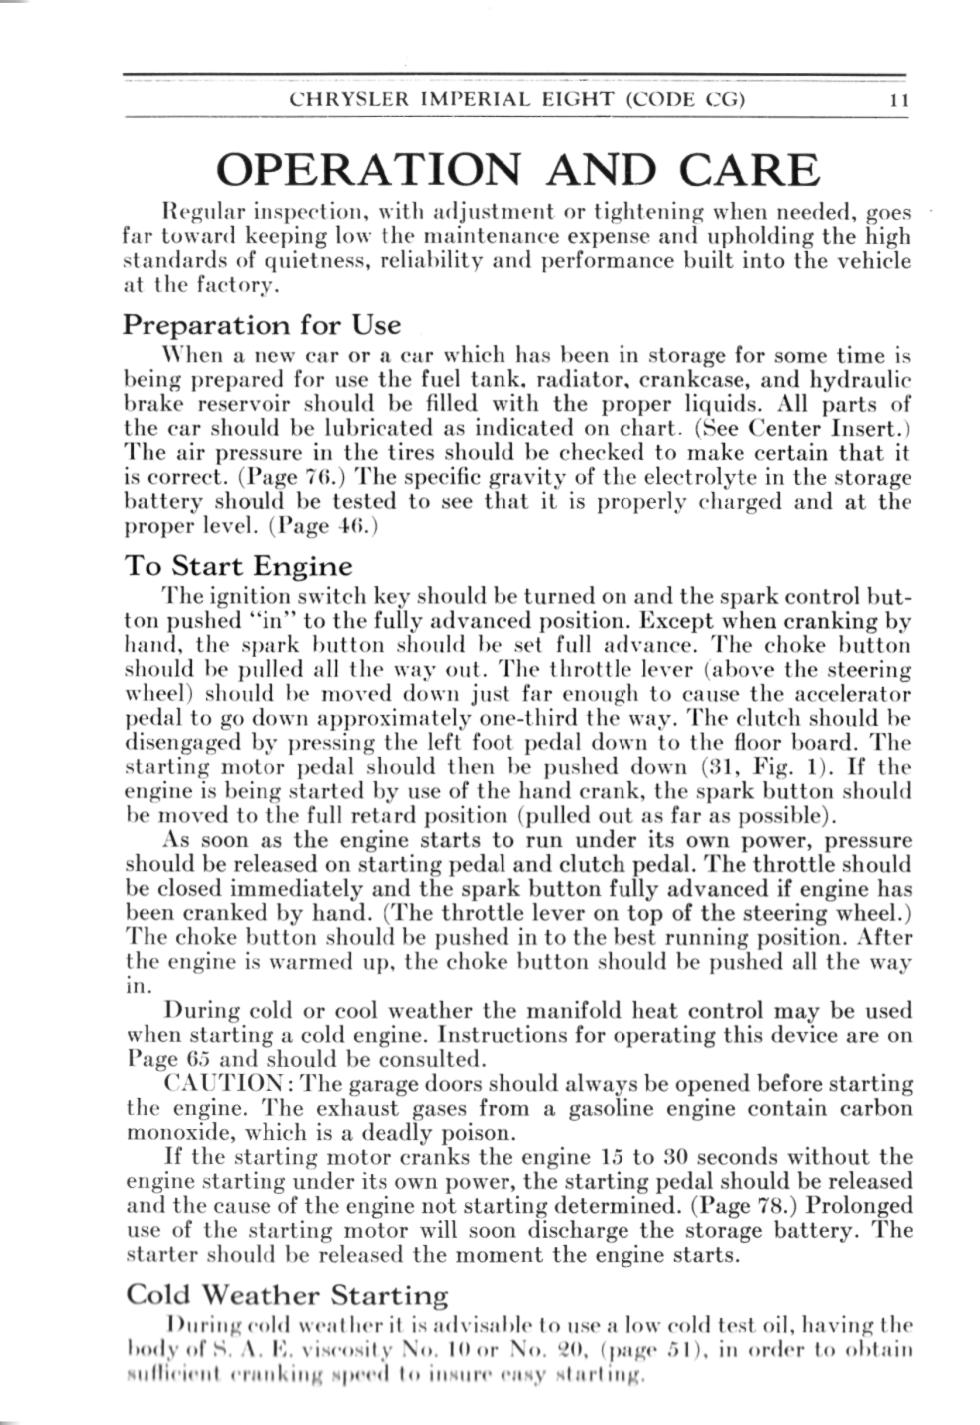 1931 Chrysler Imperial Manual-11